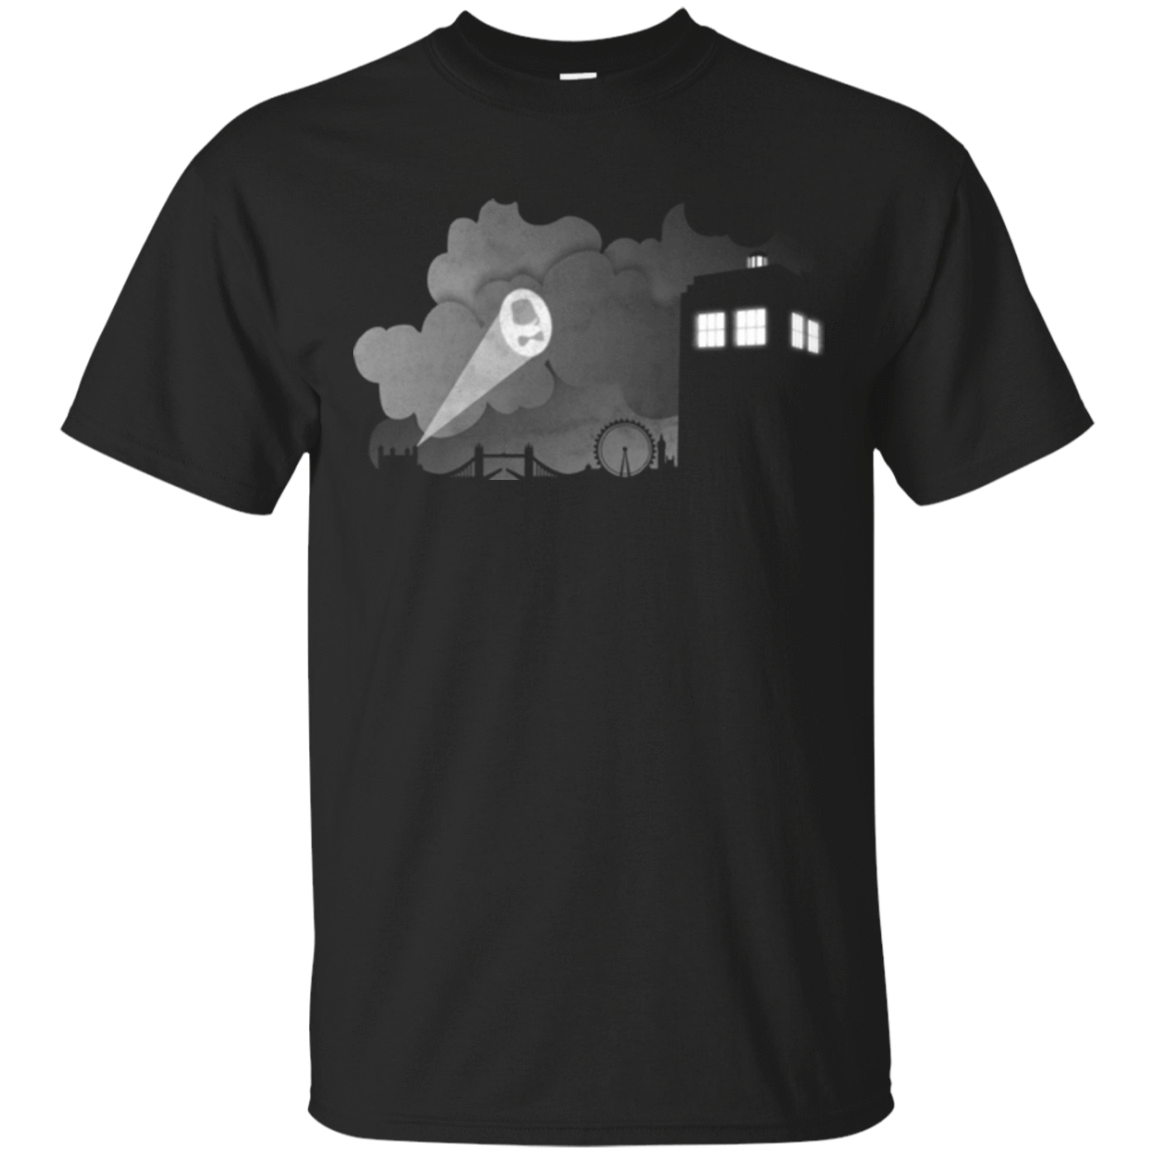 T-Shirts Black / Small Bat Tardis T-Shirt